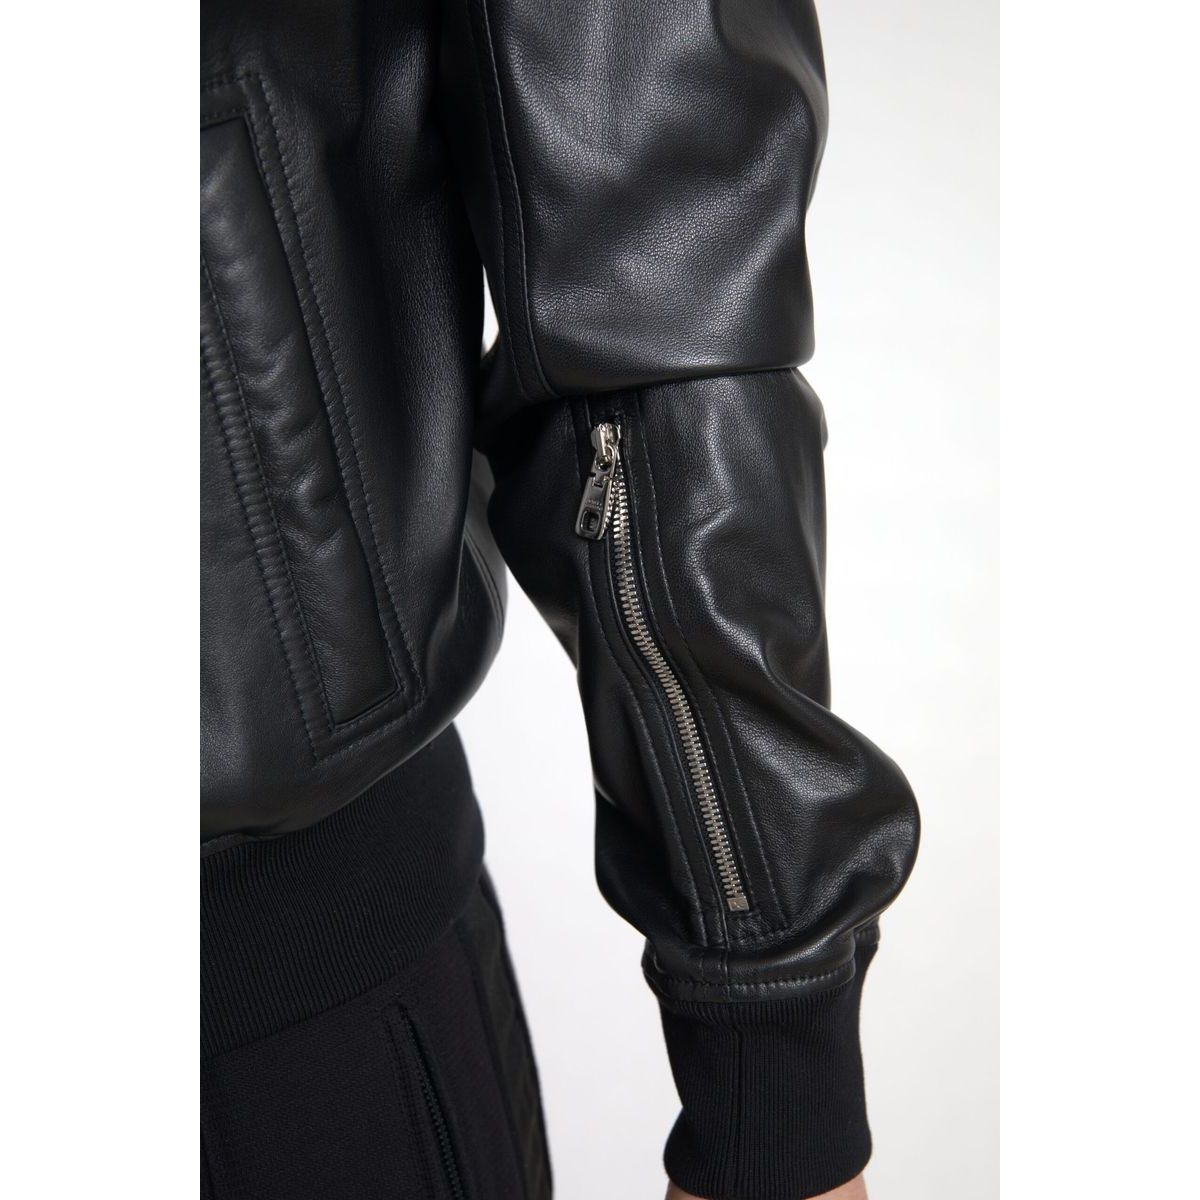 Dolce & Gabbana Elegant Black Leather Bomber Jacket black-leather-full-zip-bomber-men-jacket